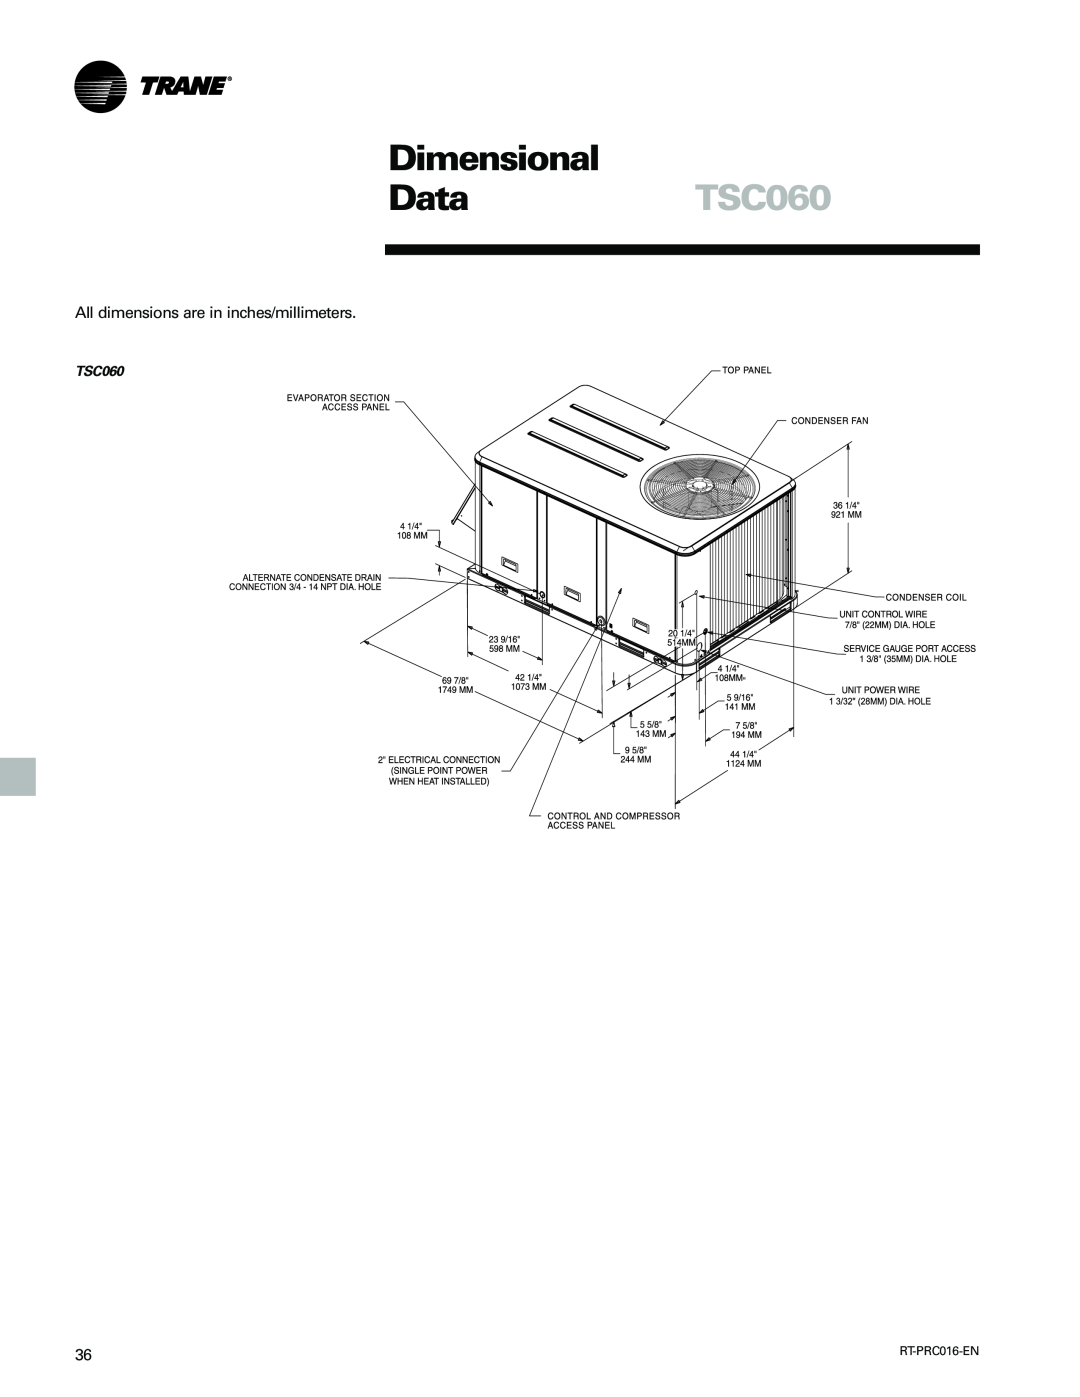 Trane TSC060-120 manual Dimensional, DataTSC060 